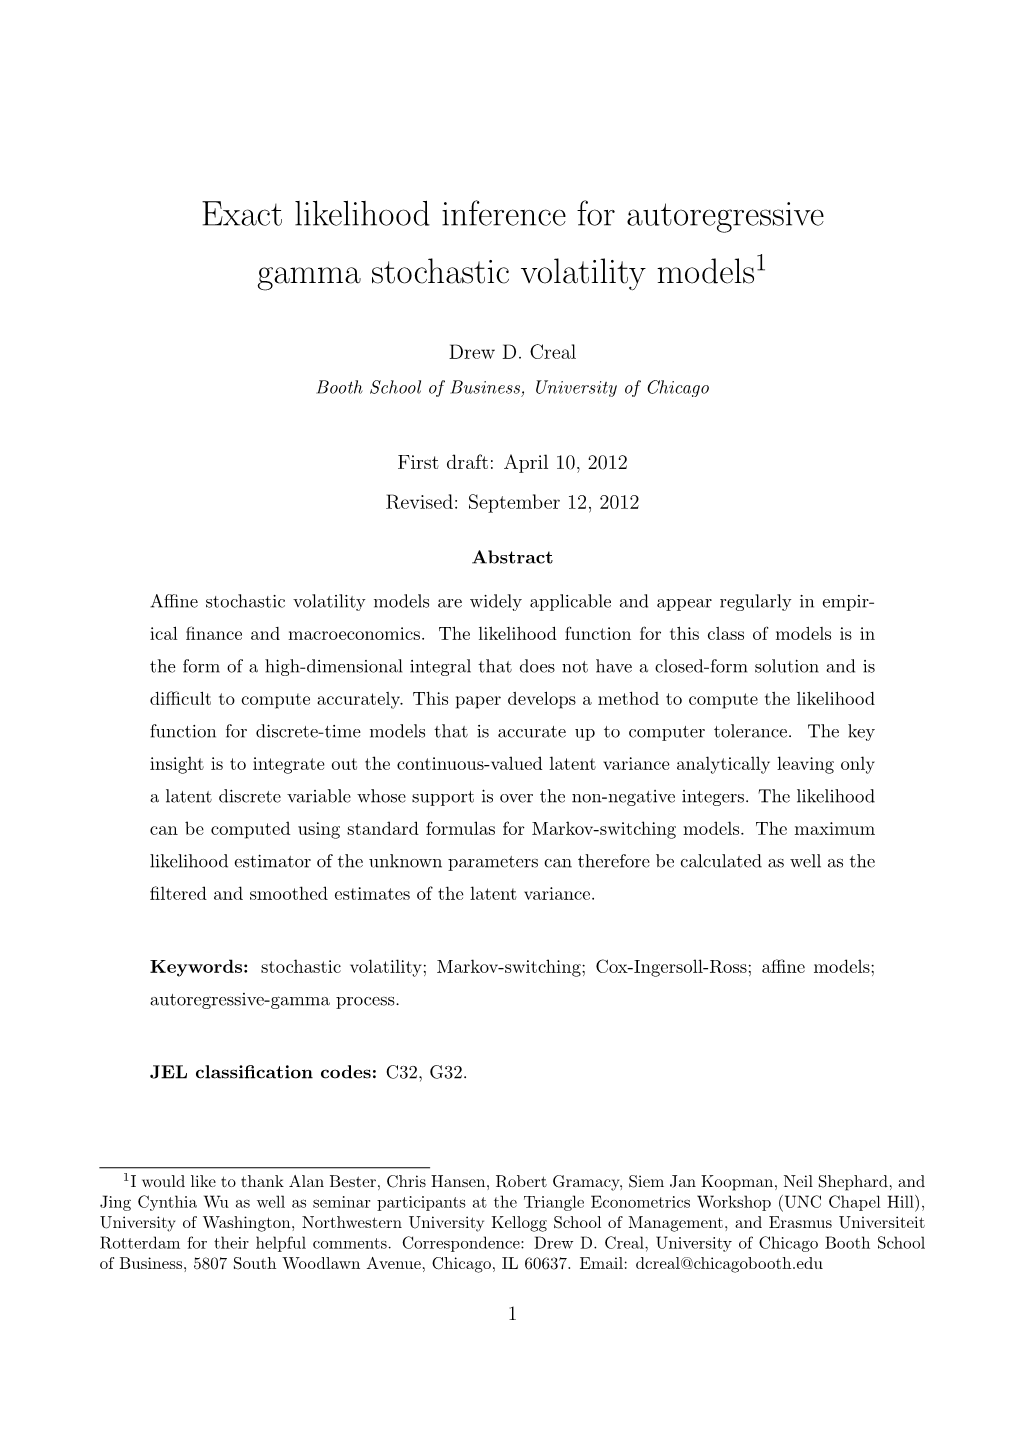 Exact Likelihood Inference for Autoregressive Gamma Stochastic Volatility Models1